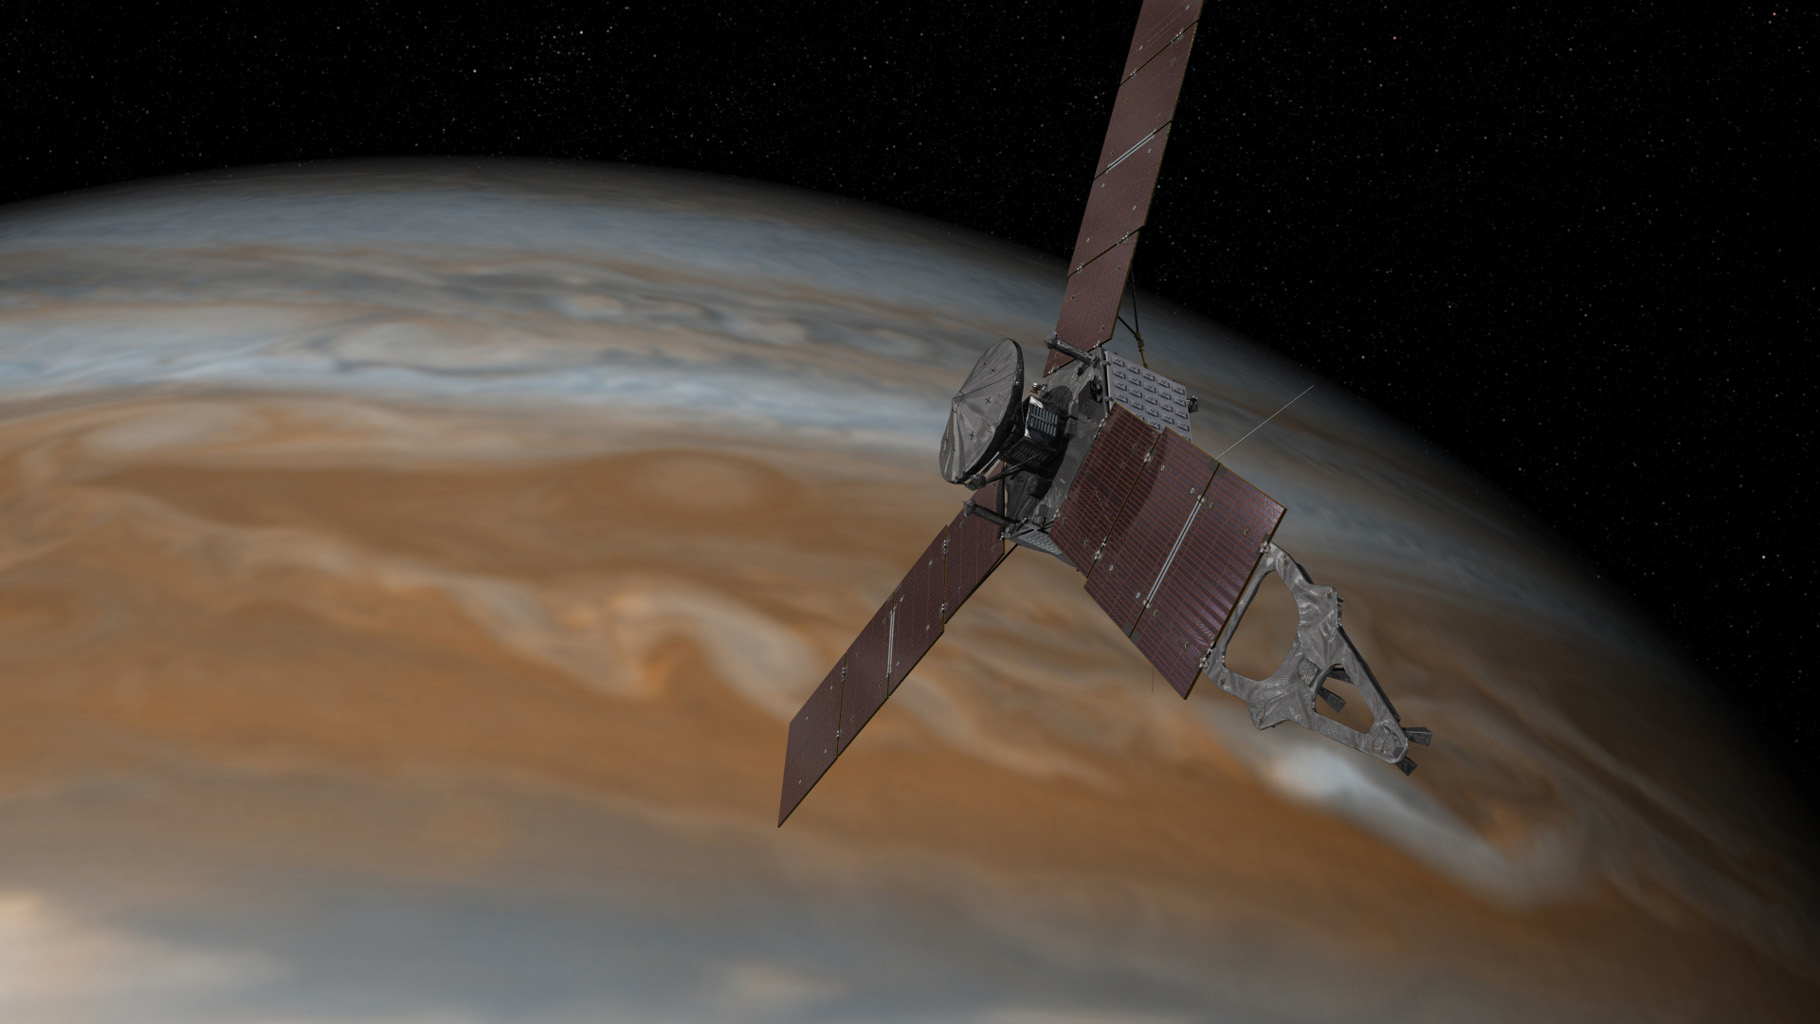 Artist's conception of Juno orbiting Jupiter. Image Credit: NASA